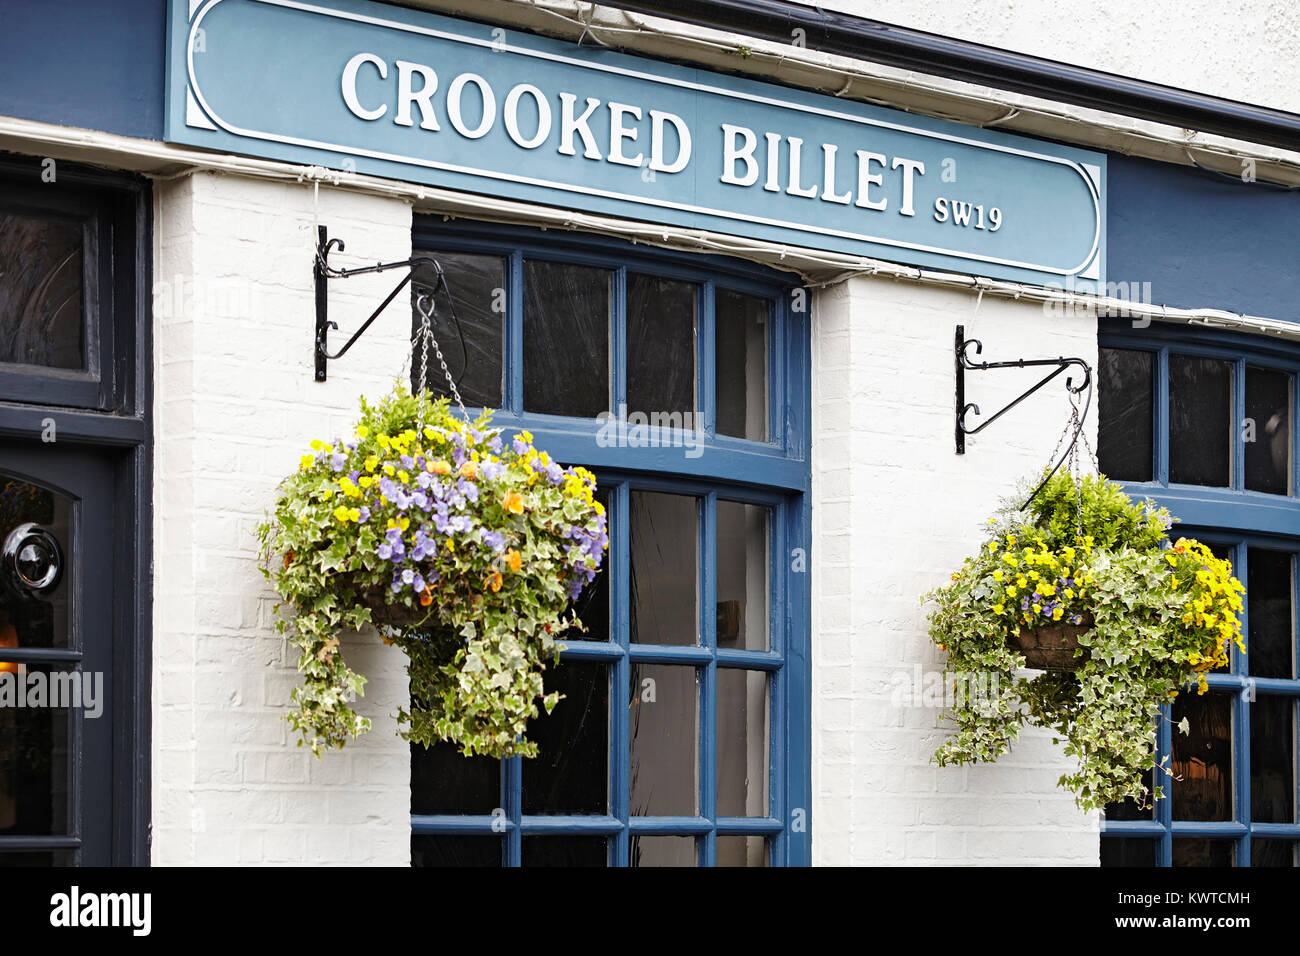 Crooked Billet pub signage in Wimbledon, London Stockfoto